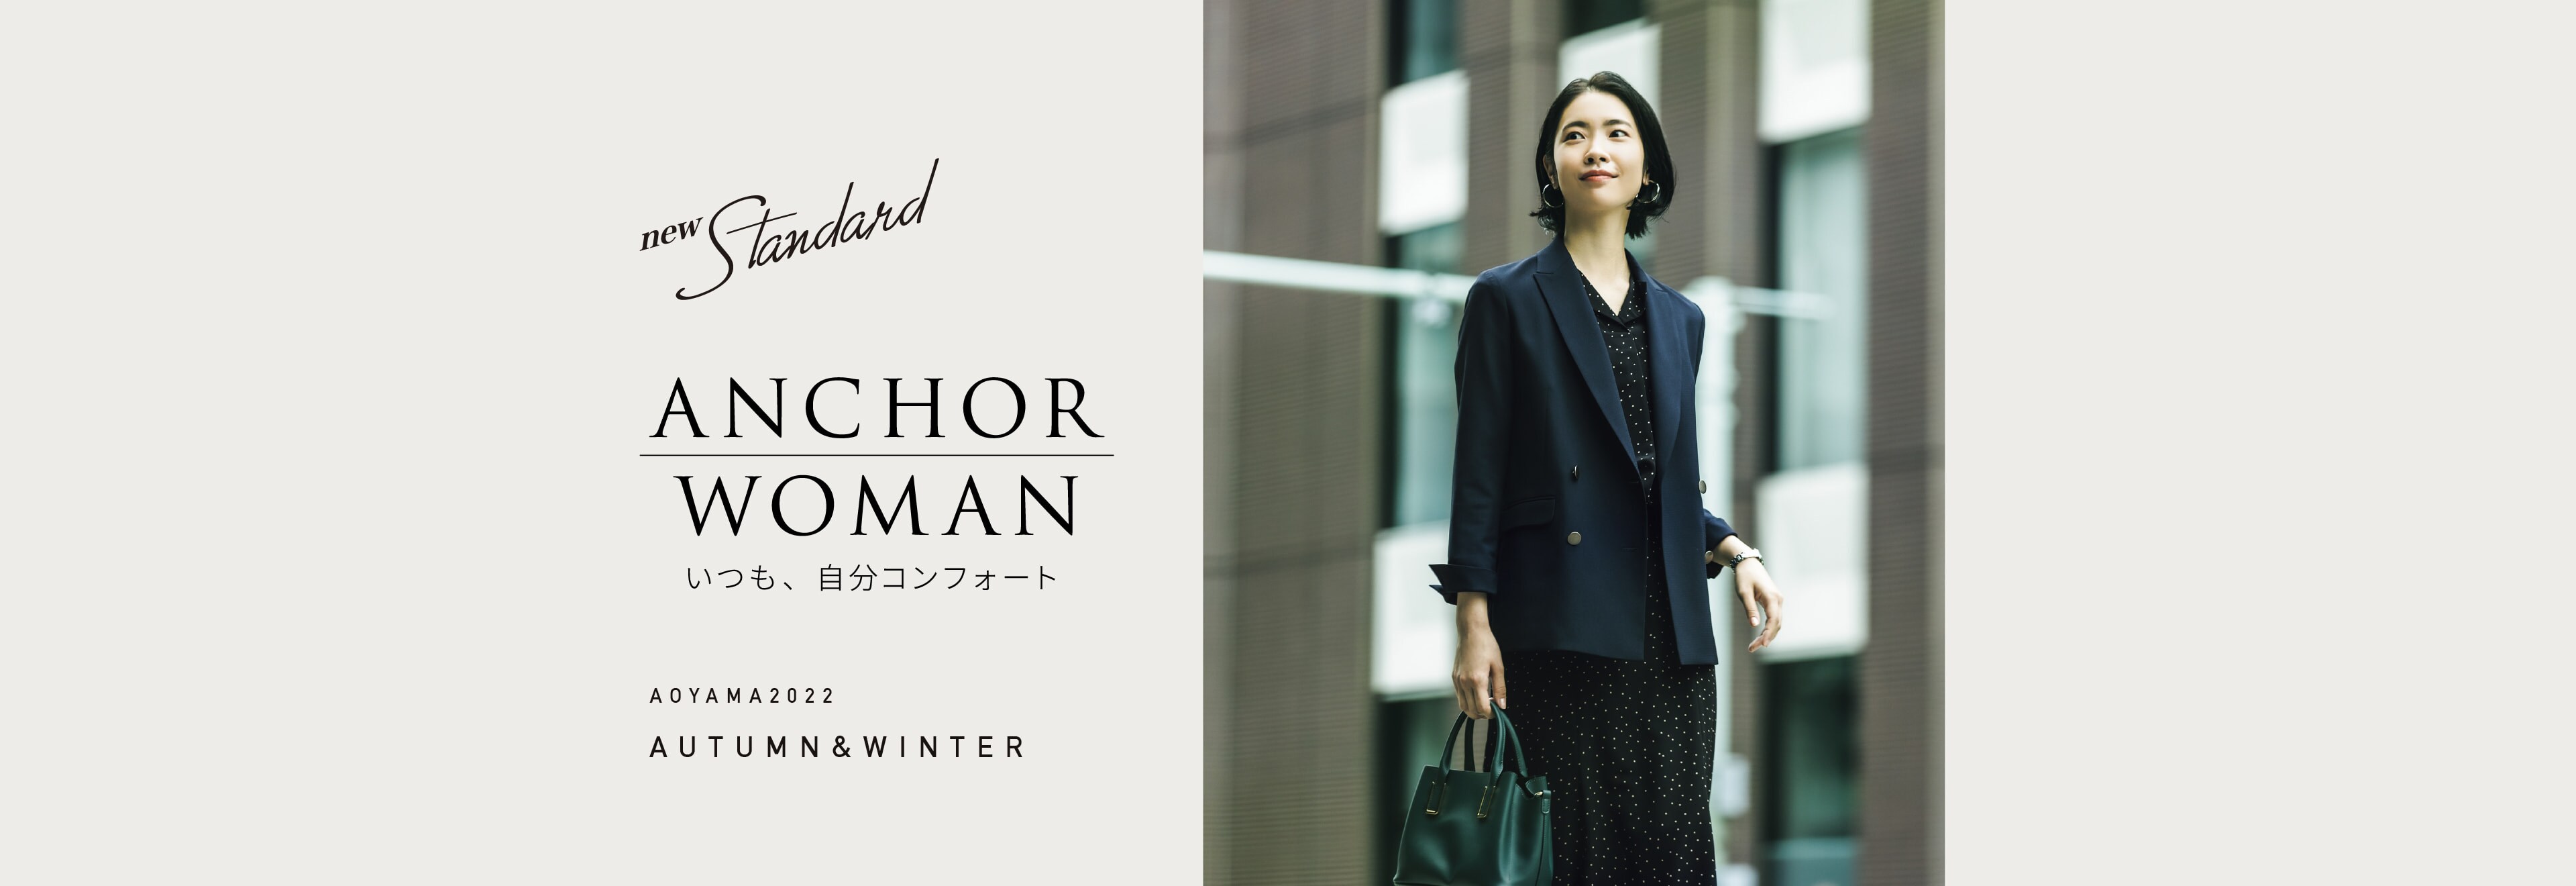 new Standard ANCHOR WOMAN AOYAMA2022 AUTUMN & WINTER | 紳士服 